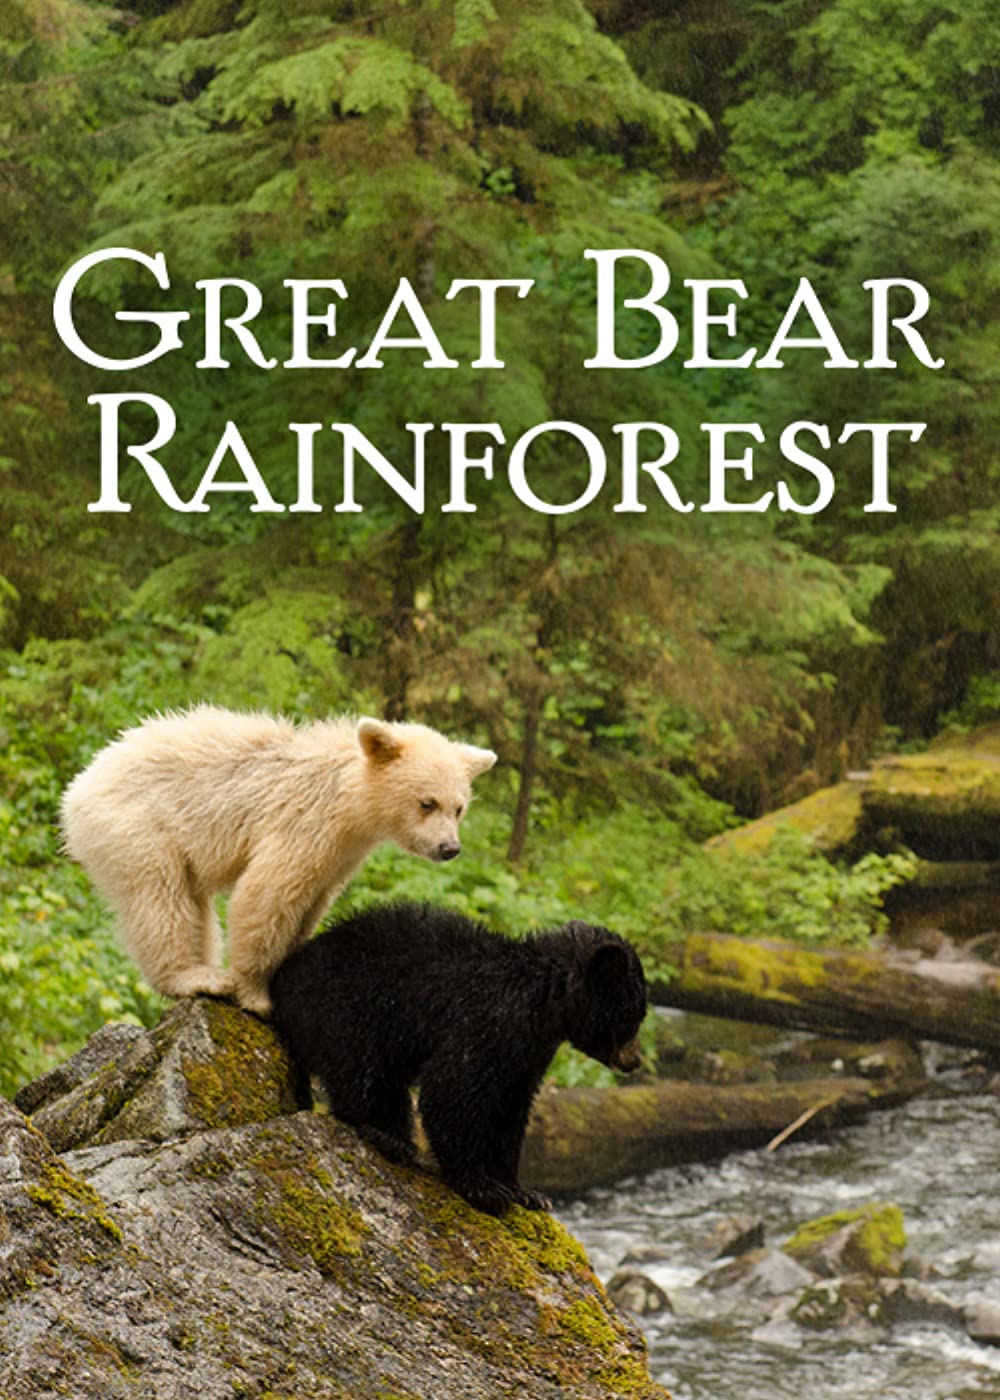 Great Bear Rainforest Movie Download - Download Great Bear Rainforest